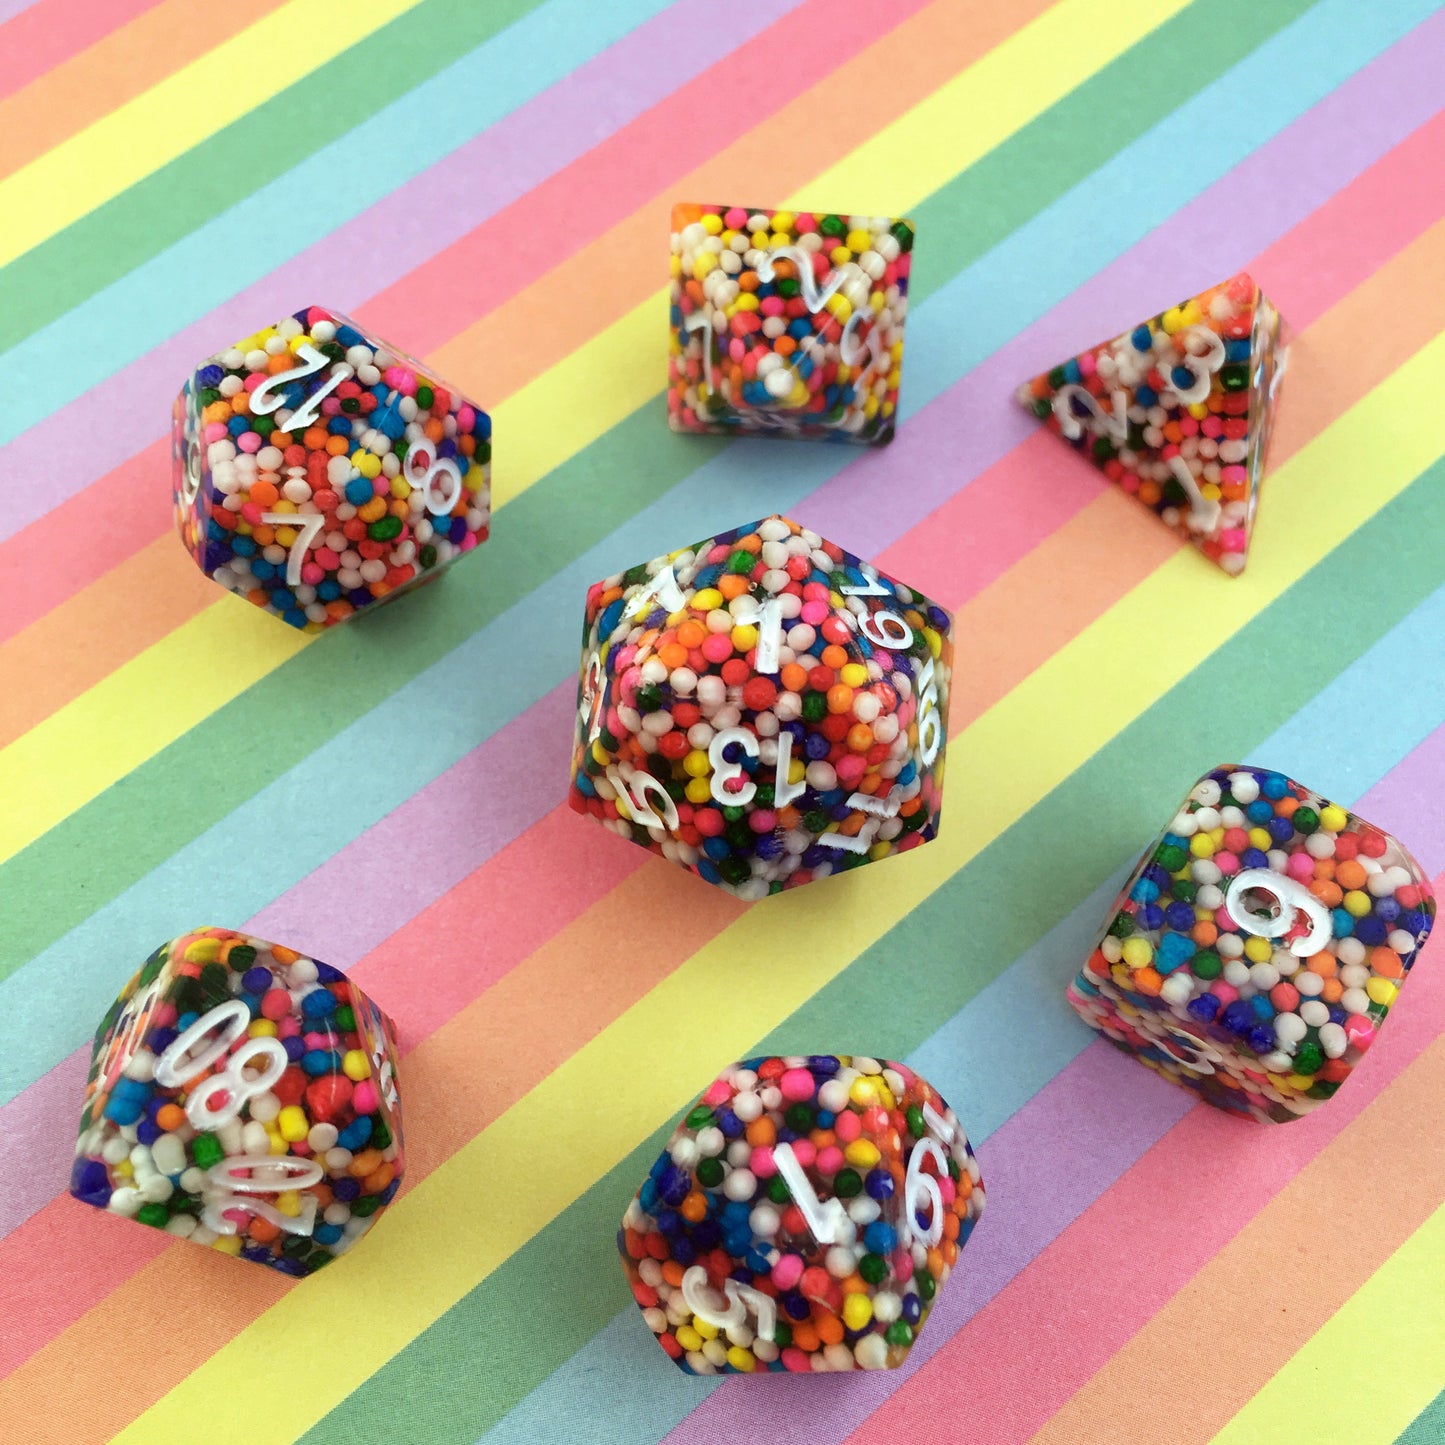 FREE Today: Rainbow Set of Dice (Give away a random dice set)